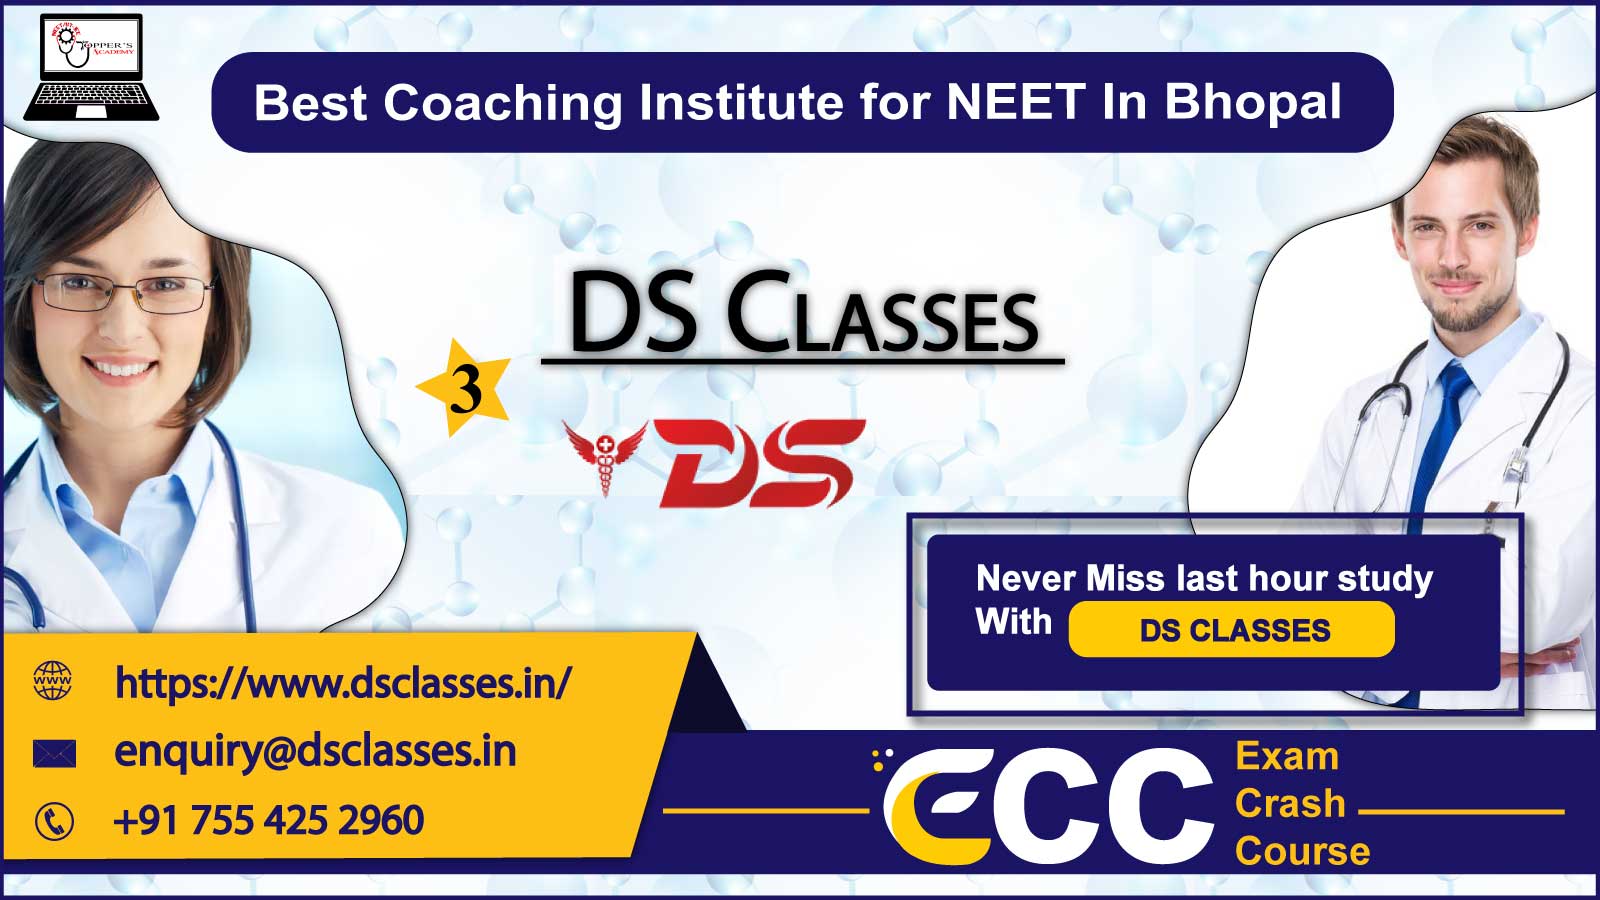 DS NEET Classes in Bhopal